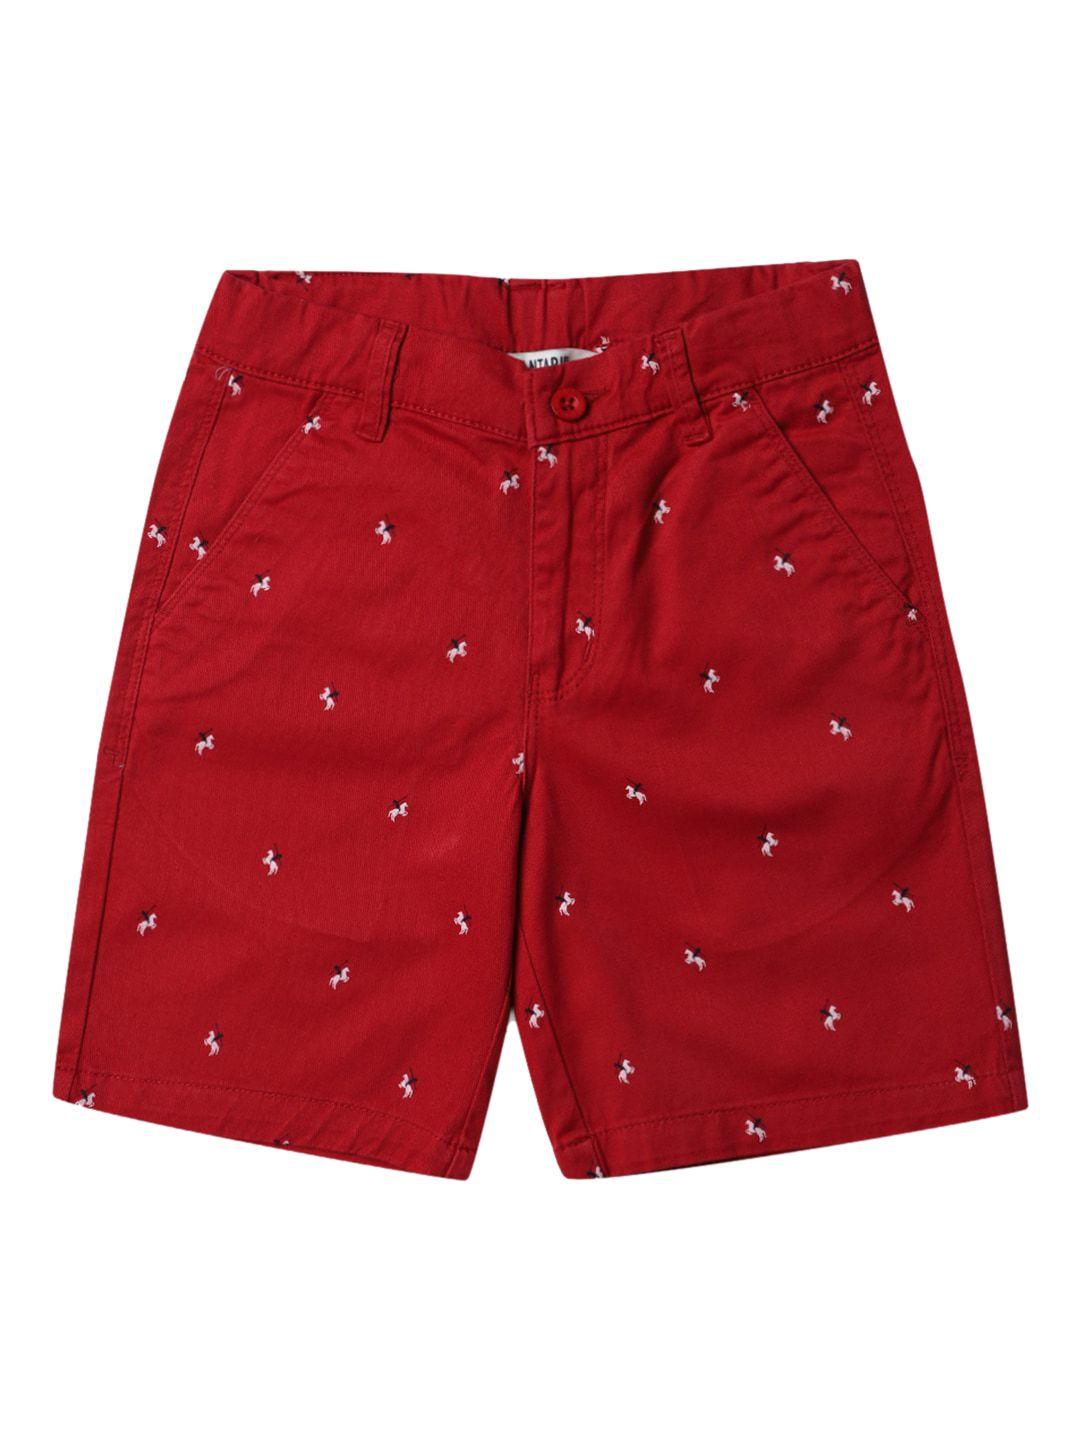 cantabil boys red printed shorts